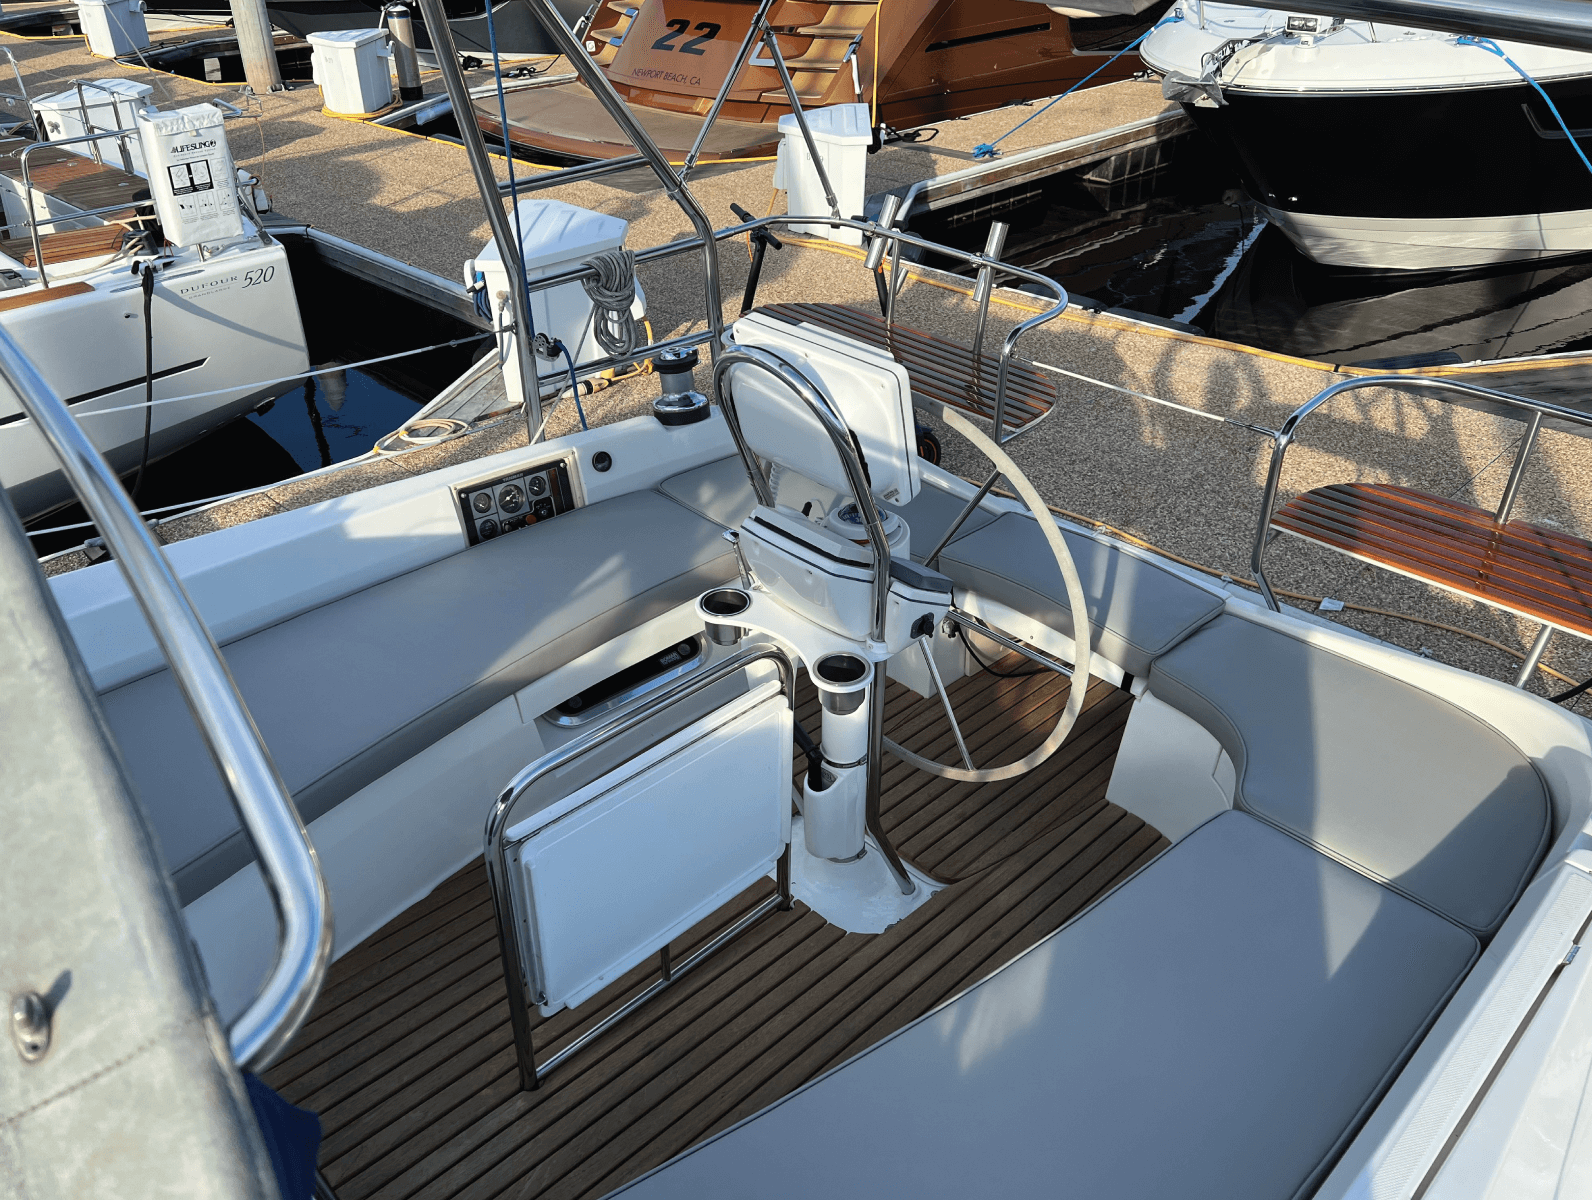 gray-seats-boat-parked